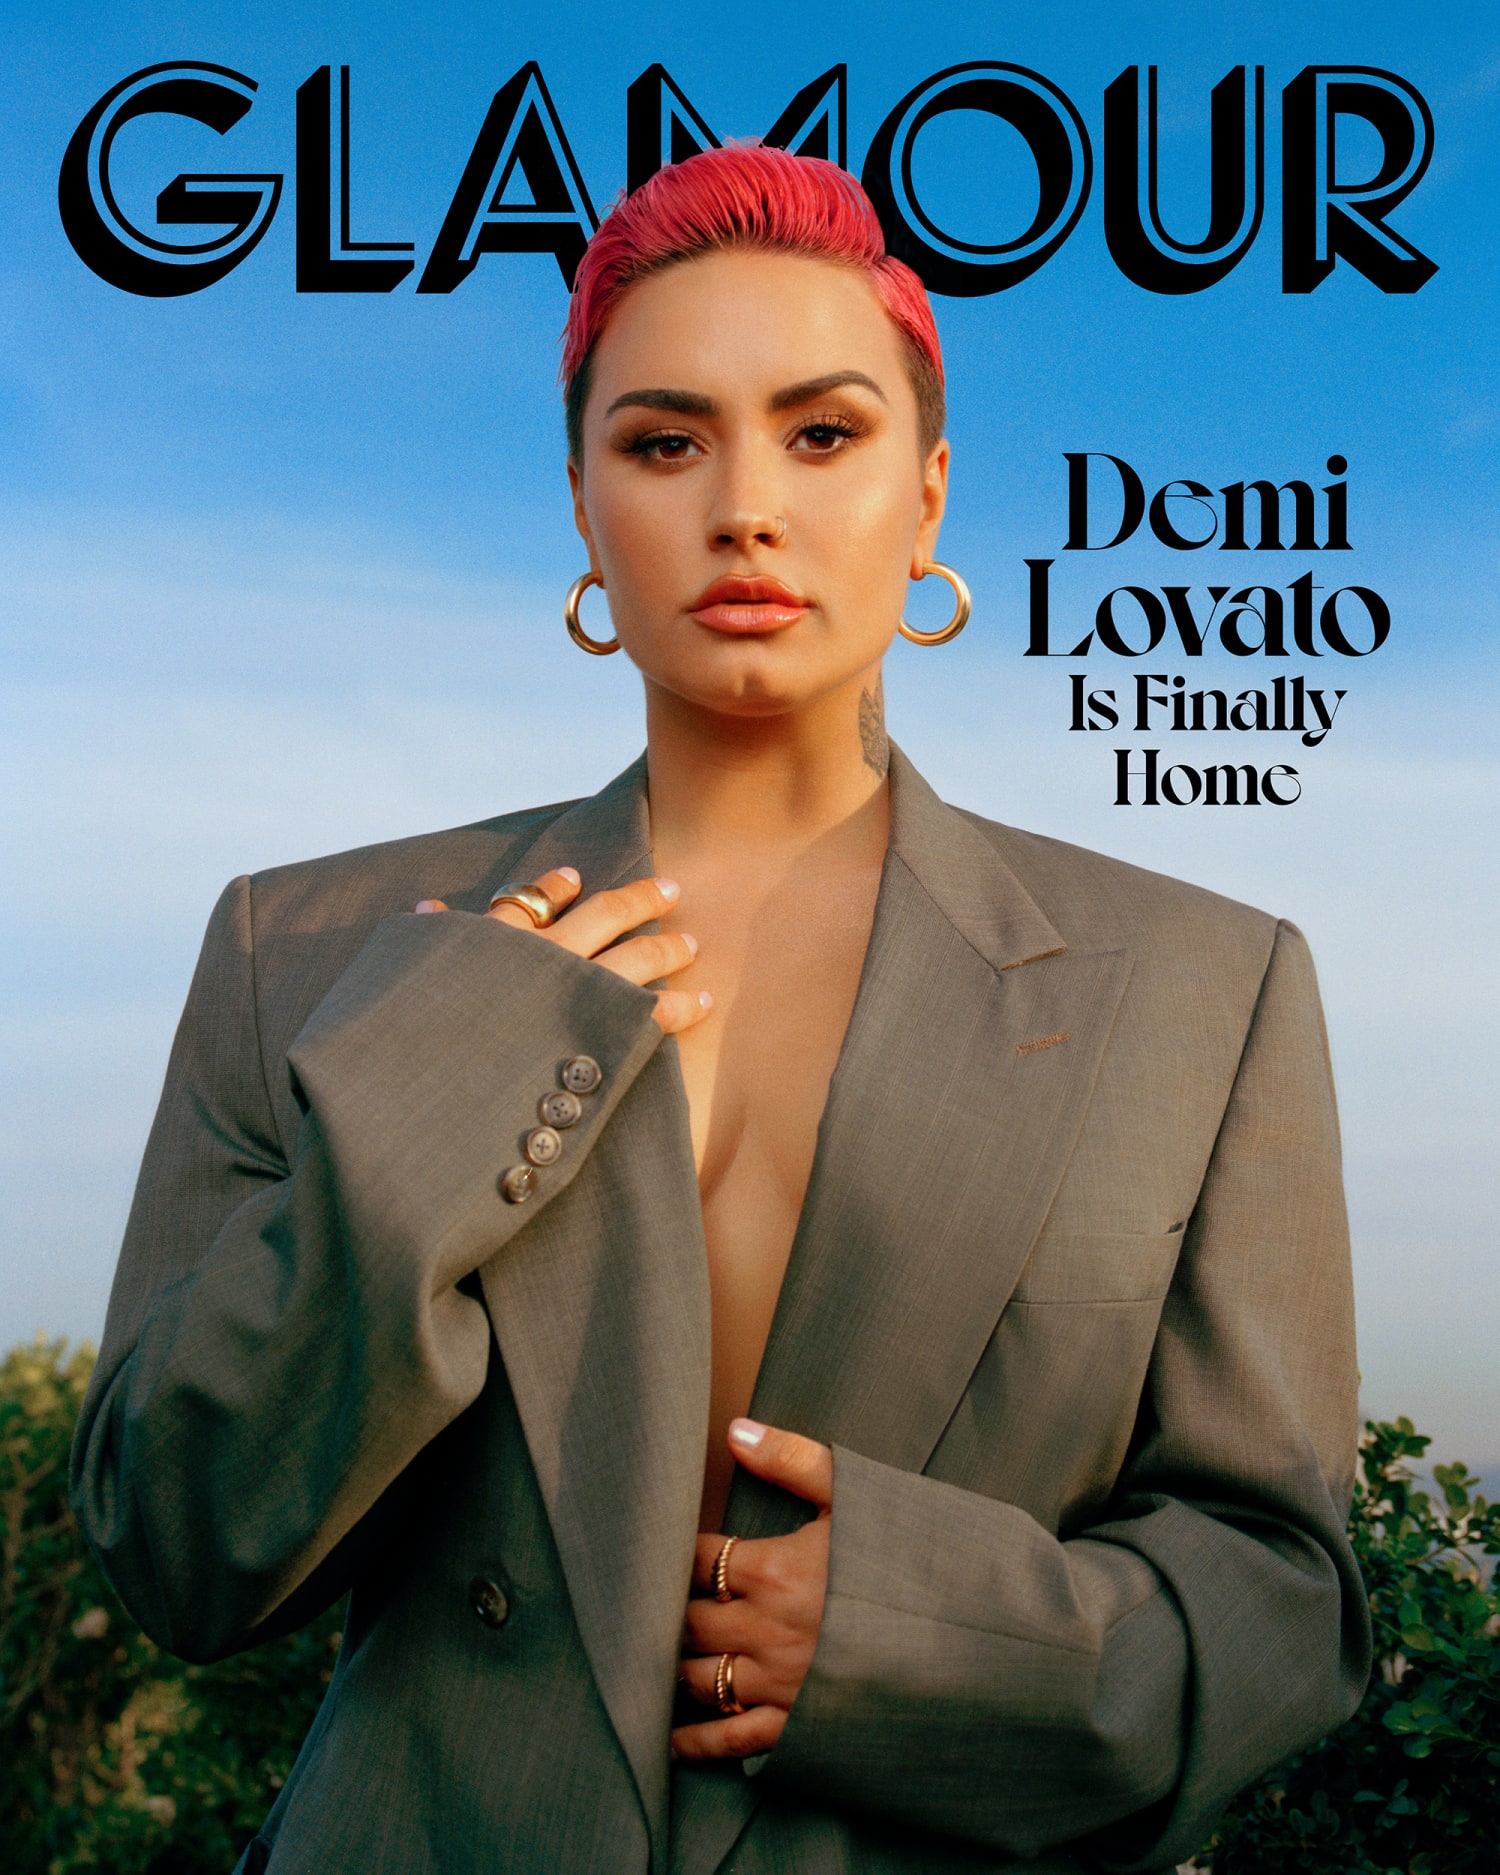 andreas espeseth recommends Demi Lovato Sex Story